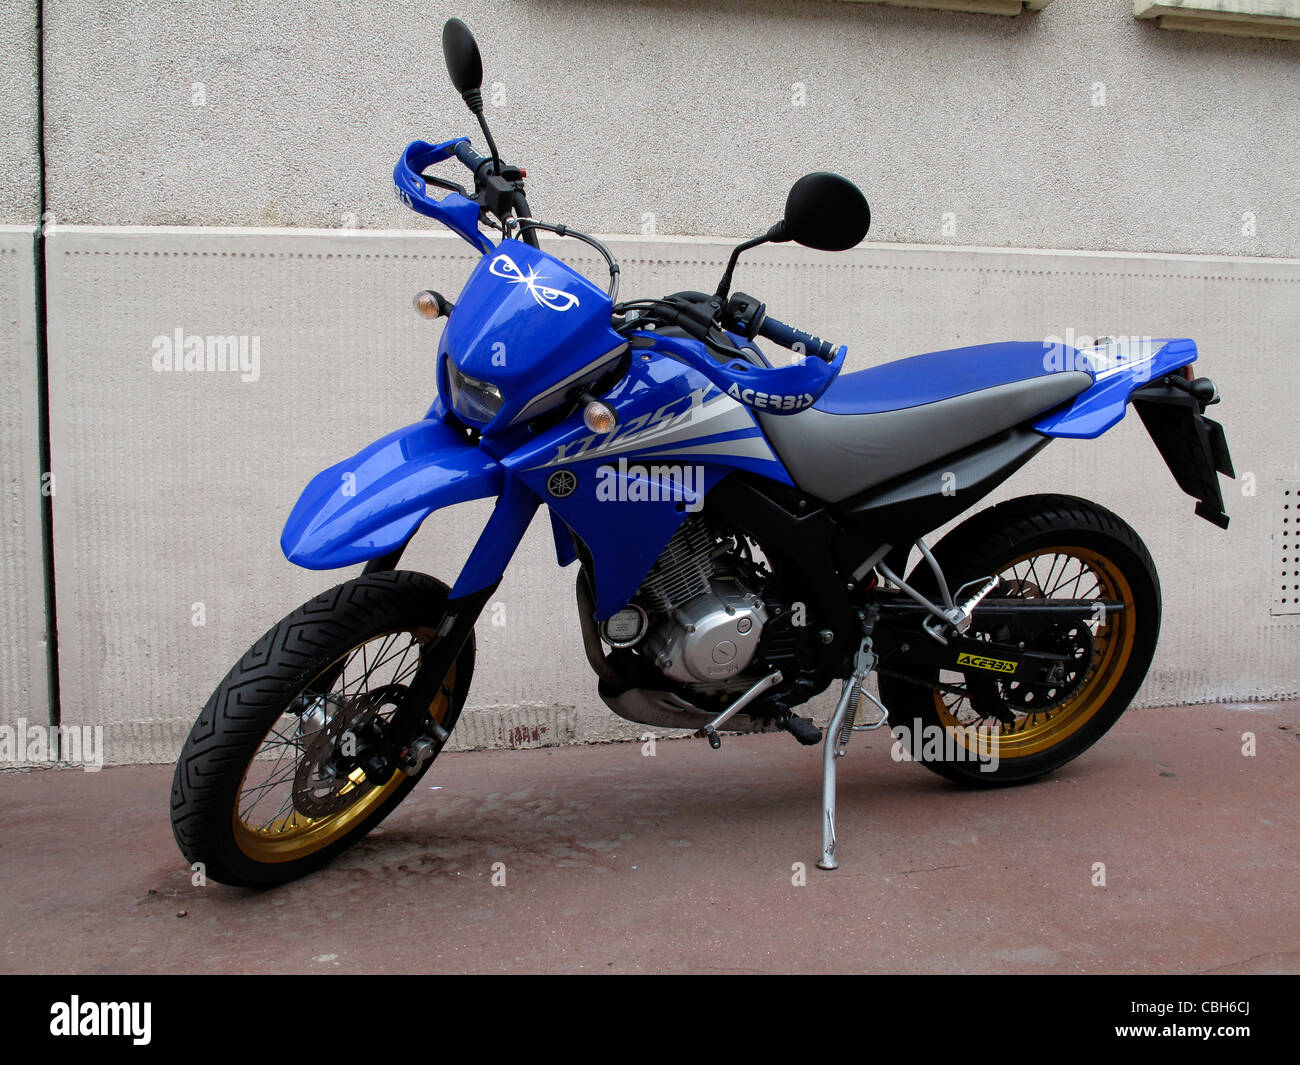 125 XTr Yamaha Moto made in Japan Foto stock - Alamy